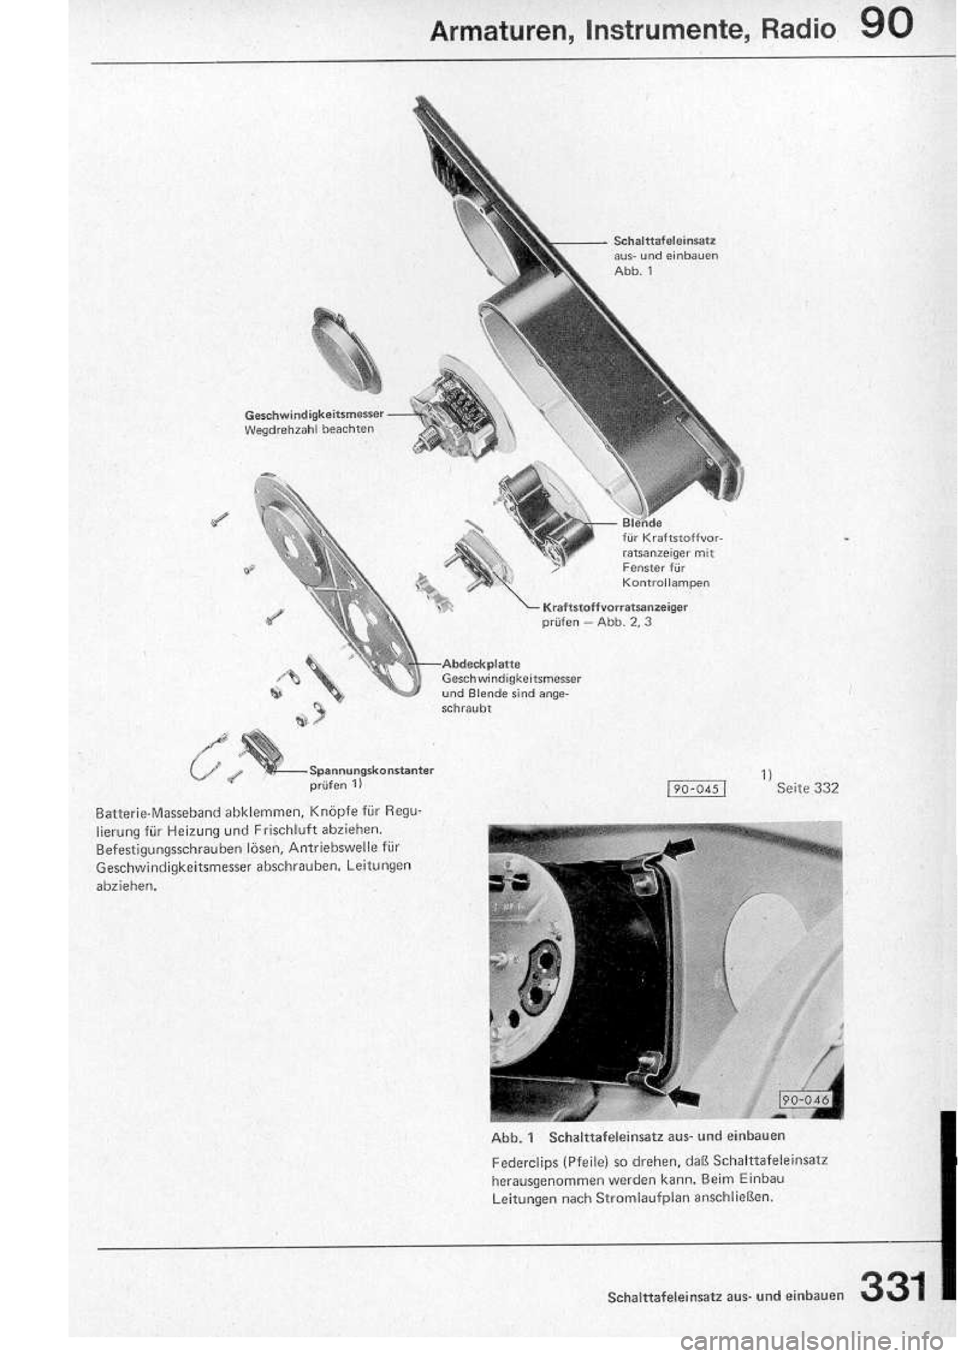 VOLKSWAGEN T2 1975  Repair Manual 
http://vwbus.dyndns.org/bulli/michaelk/vw_bus_d/rlf/10/331.jpg 